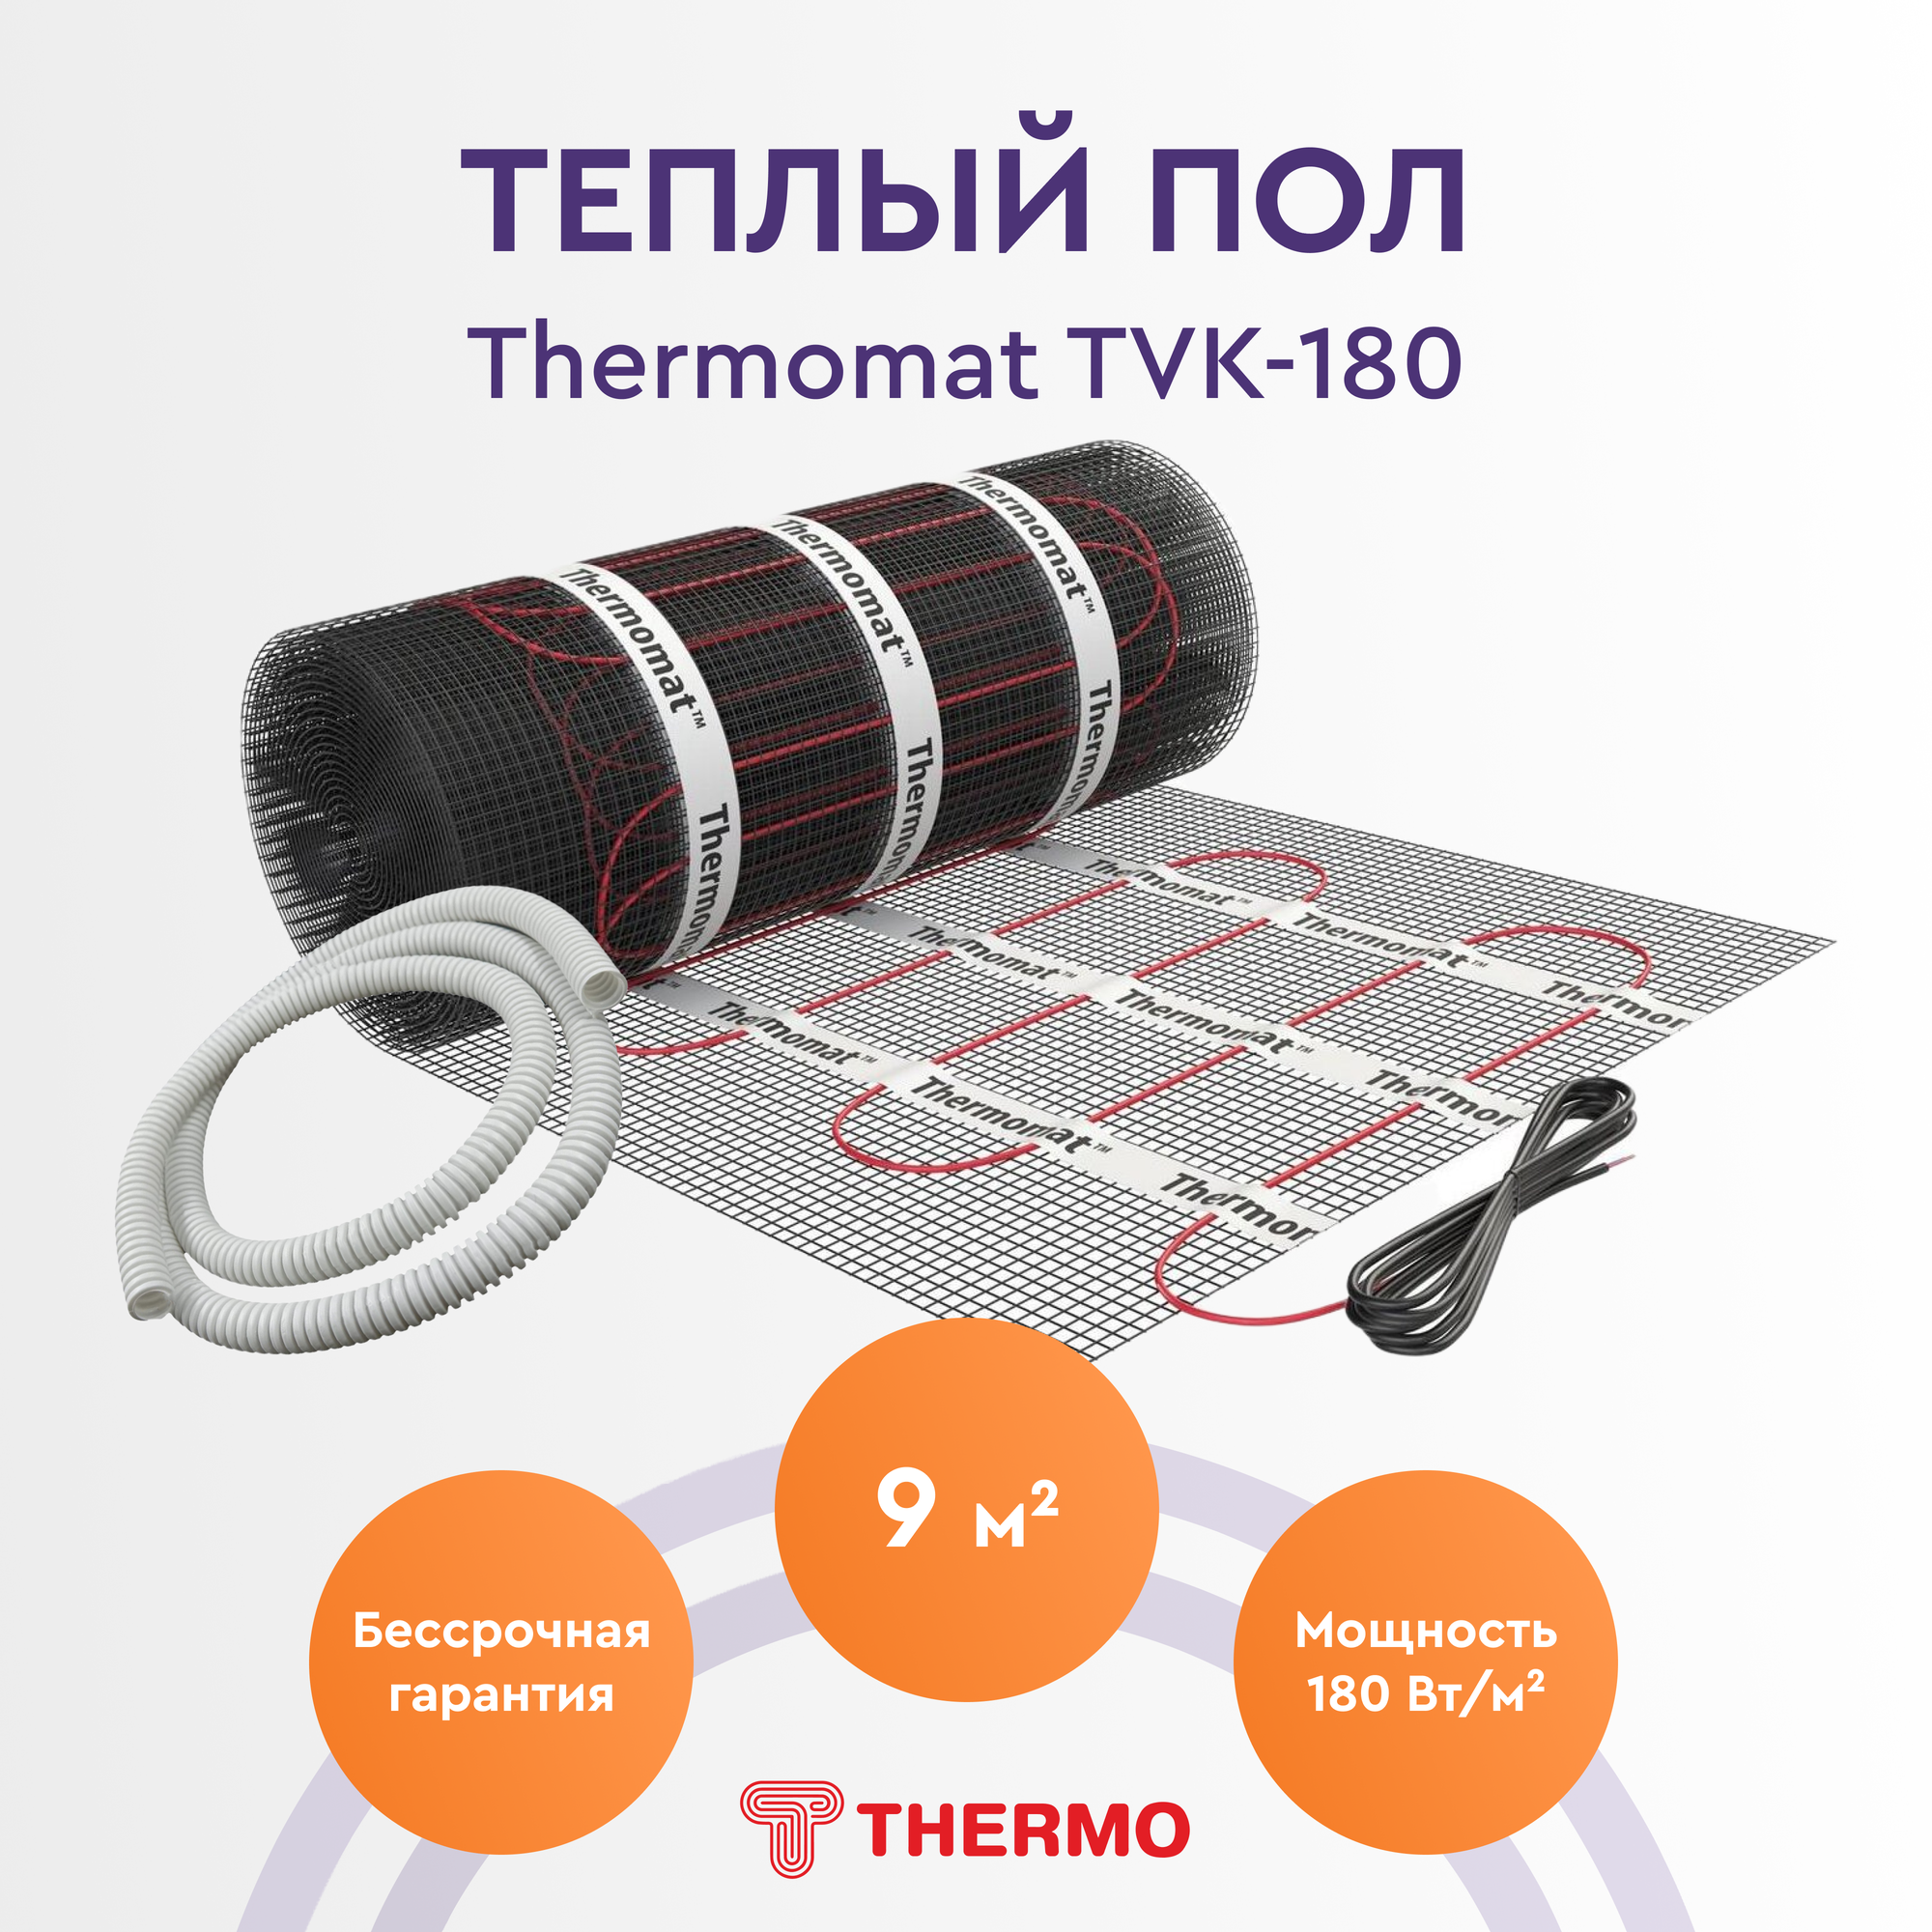 Теплый пол Thermo Thermomat TVK-180 9м. кв.